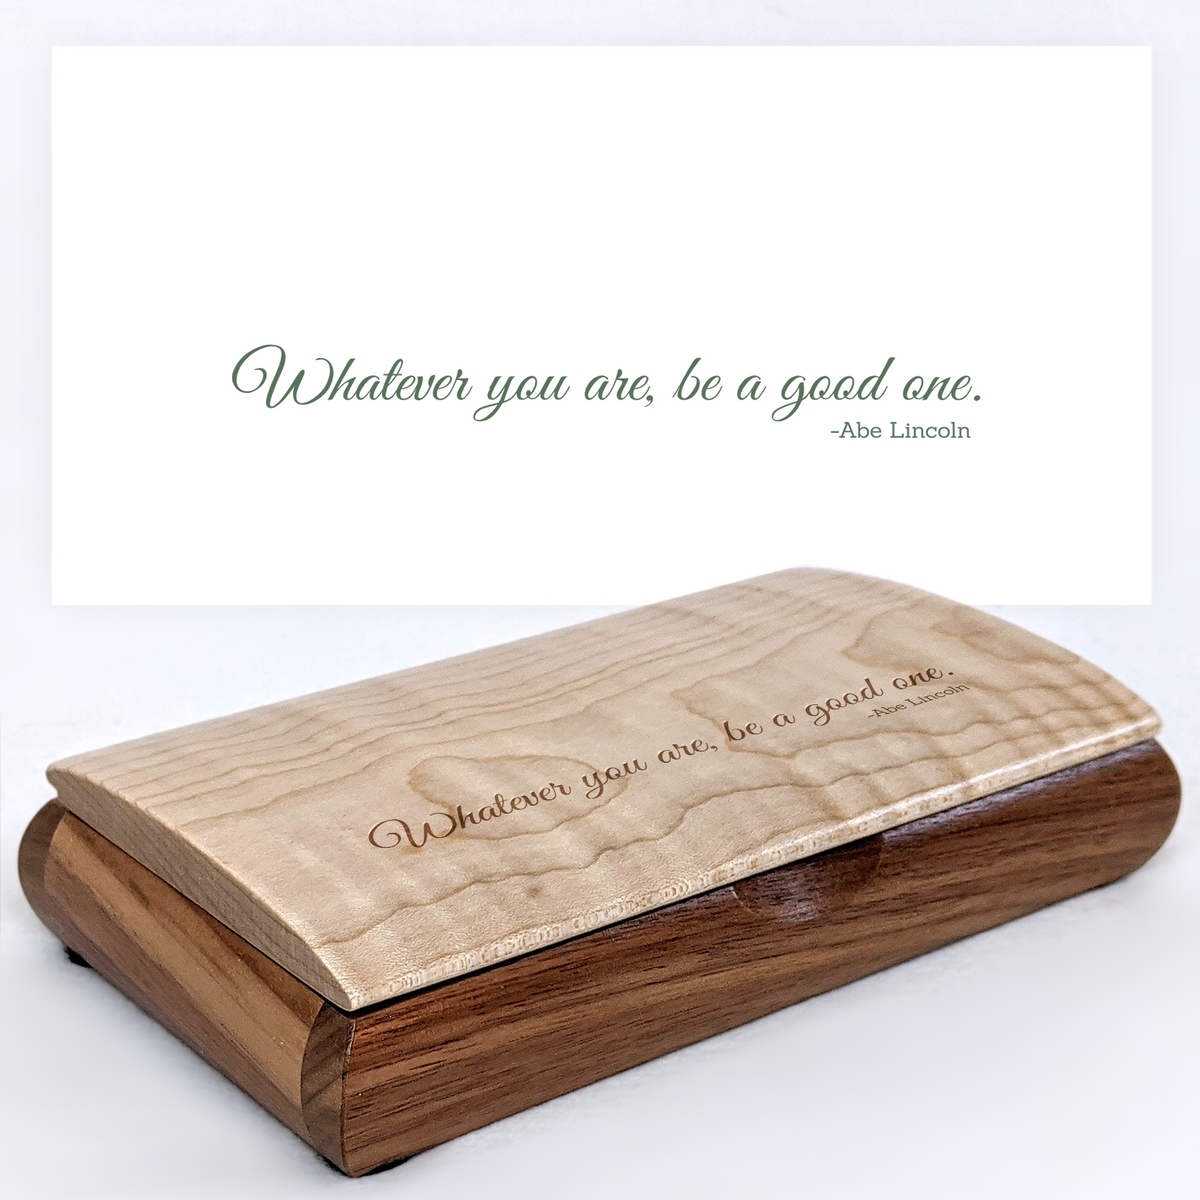 Engraved Wooden Keepsake Box for Graduation Gift - Inspirational